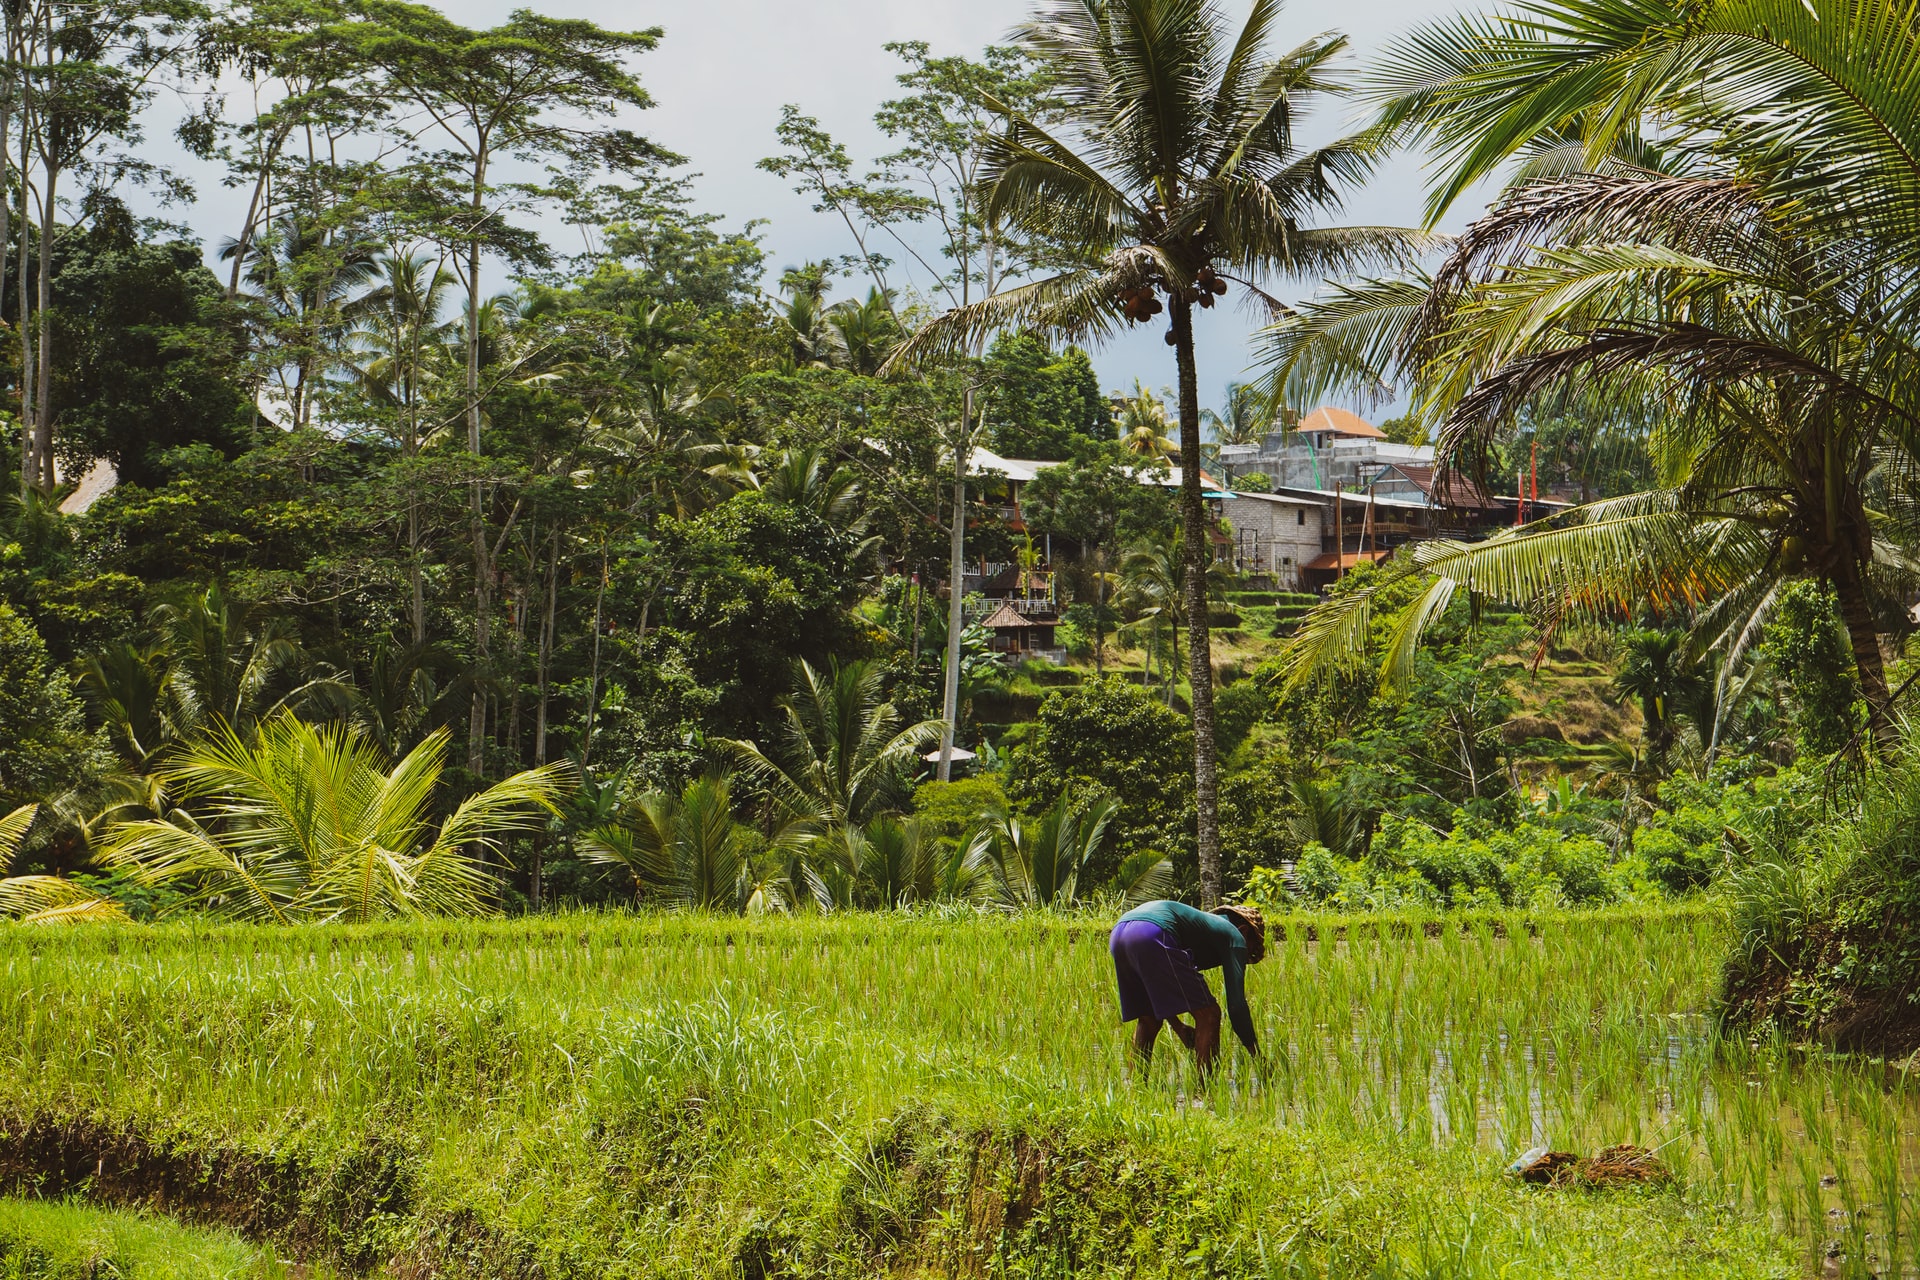 A scene from a rice field in Bali. Photo: Unsplash